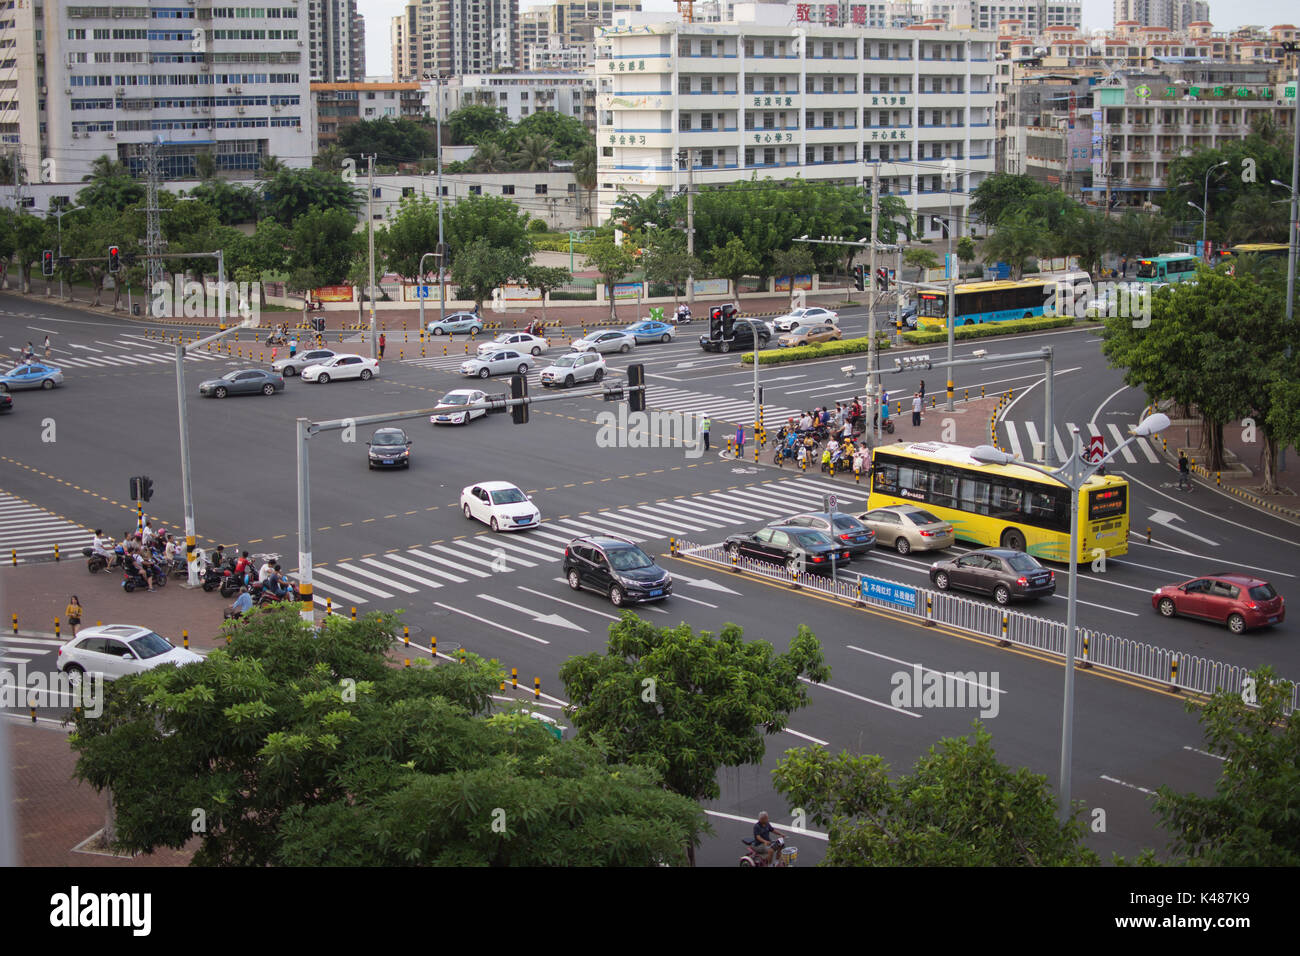 China traffic, electric Bikes, Hybrid busses Stock Photo